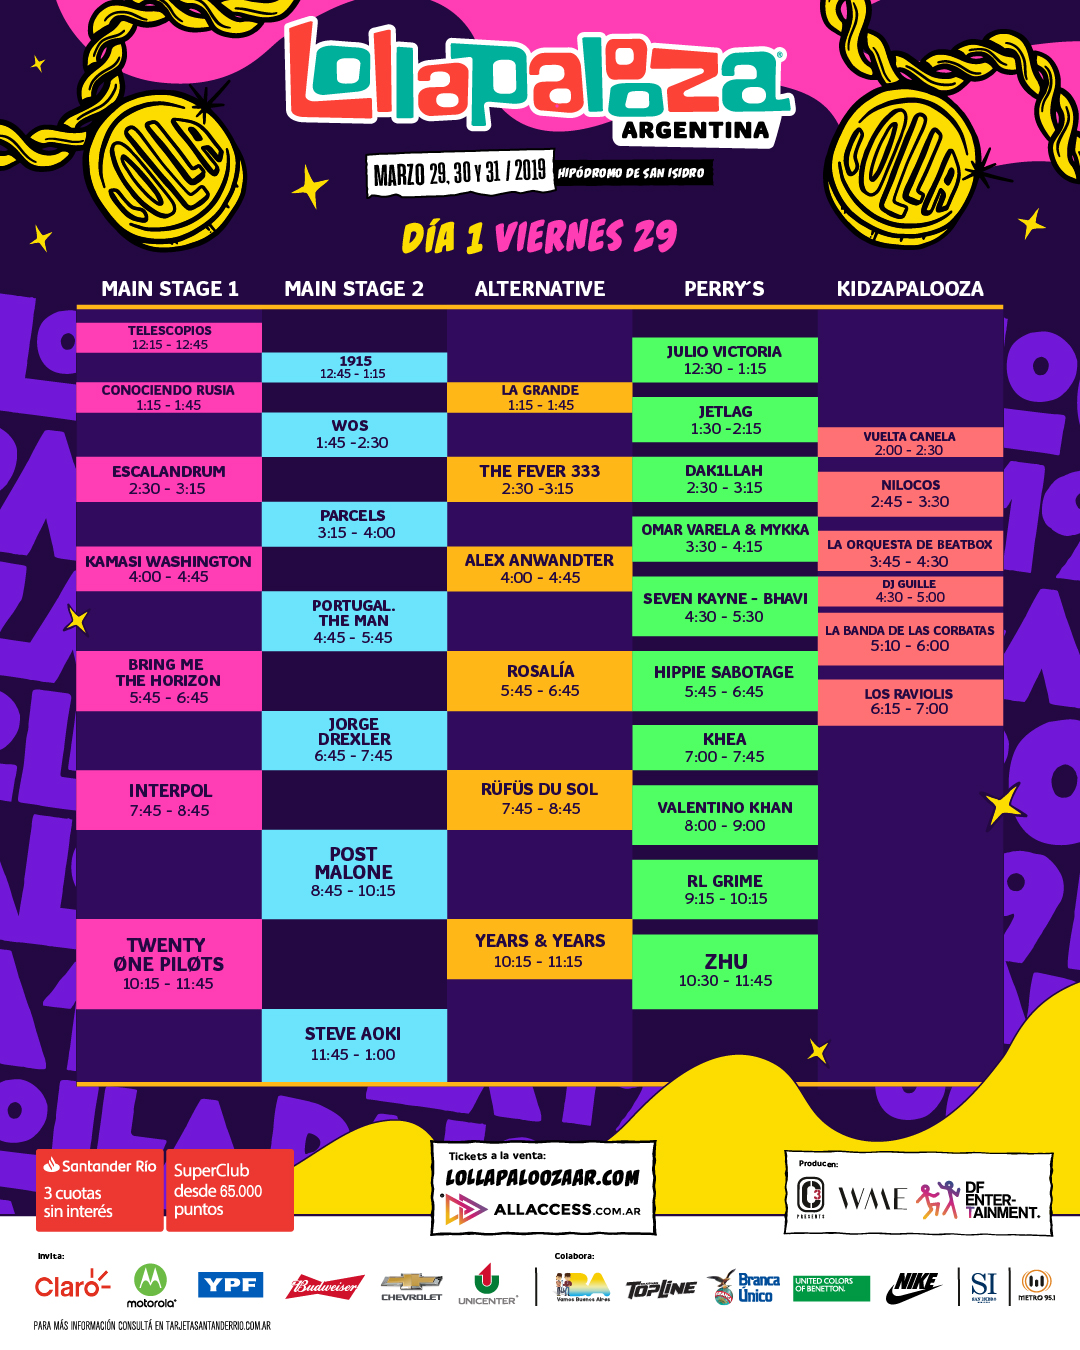 Lollapalooza 2019 viernes 29